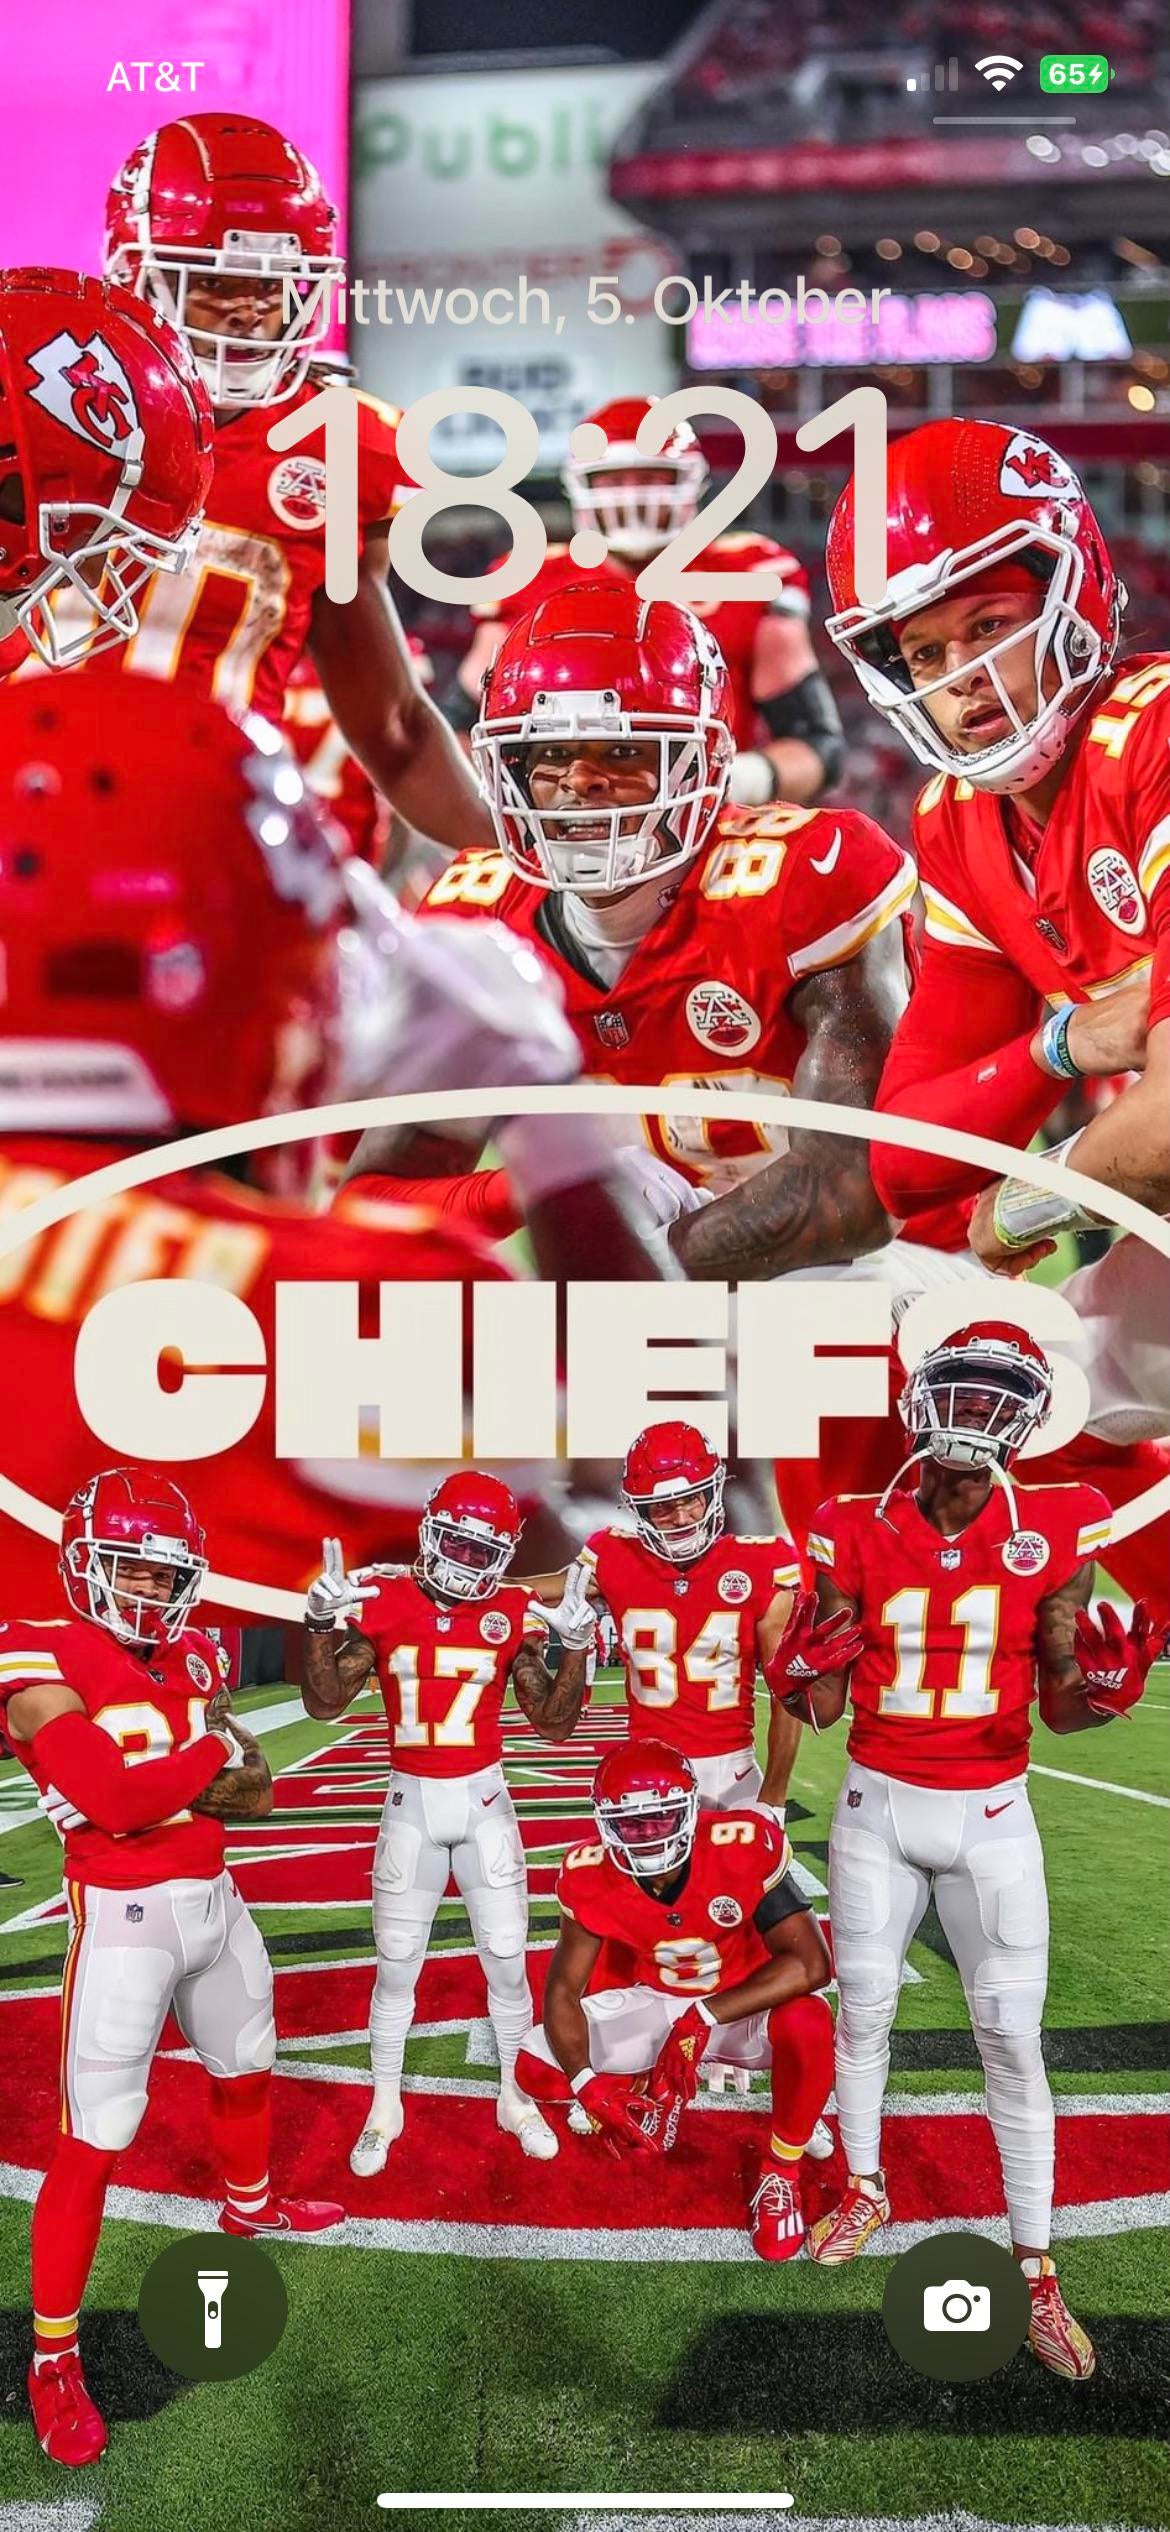 Kansas City Chiefs on Twitter Divisional Round wallpapers   WallpaperWednesday  ChiefsKingdom httpstcoYquhn6Nr1k  Twitter